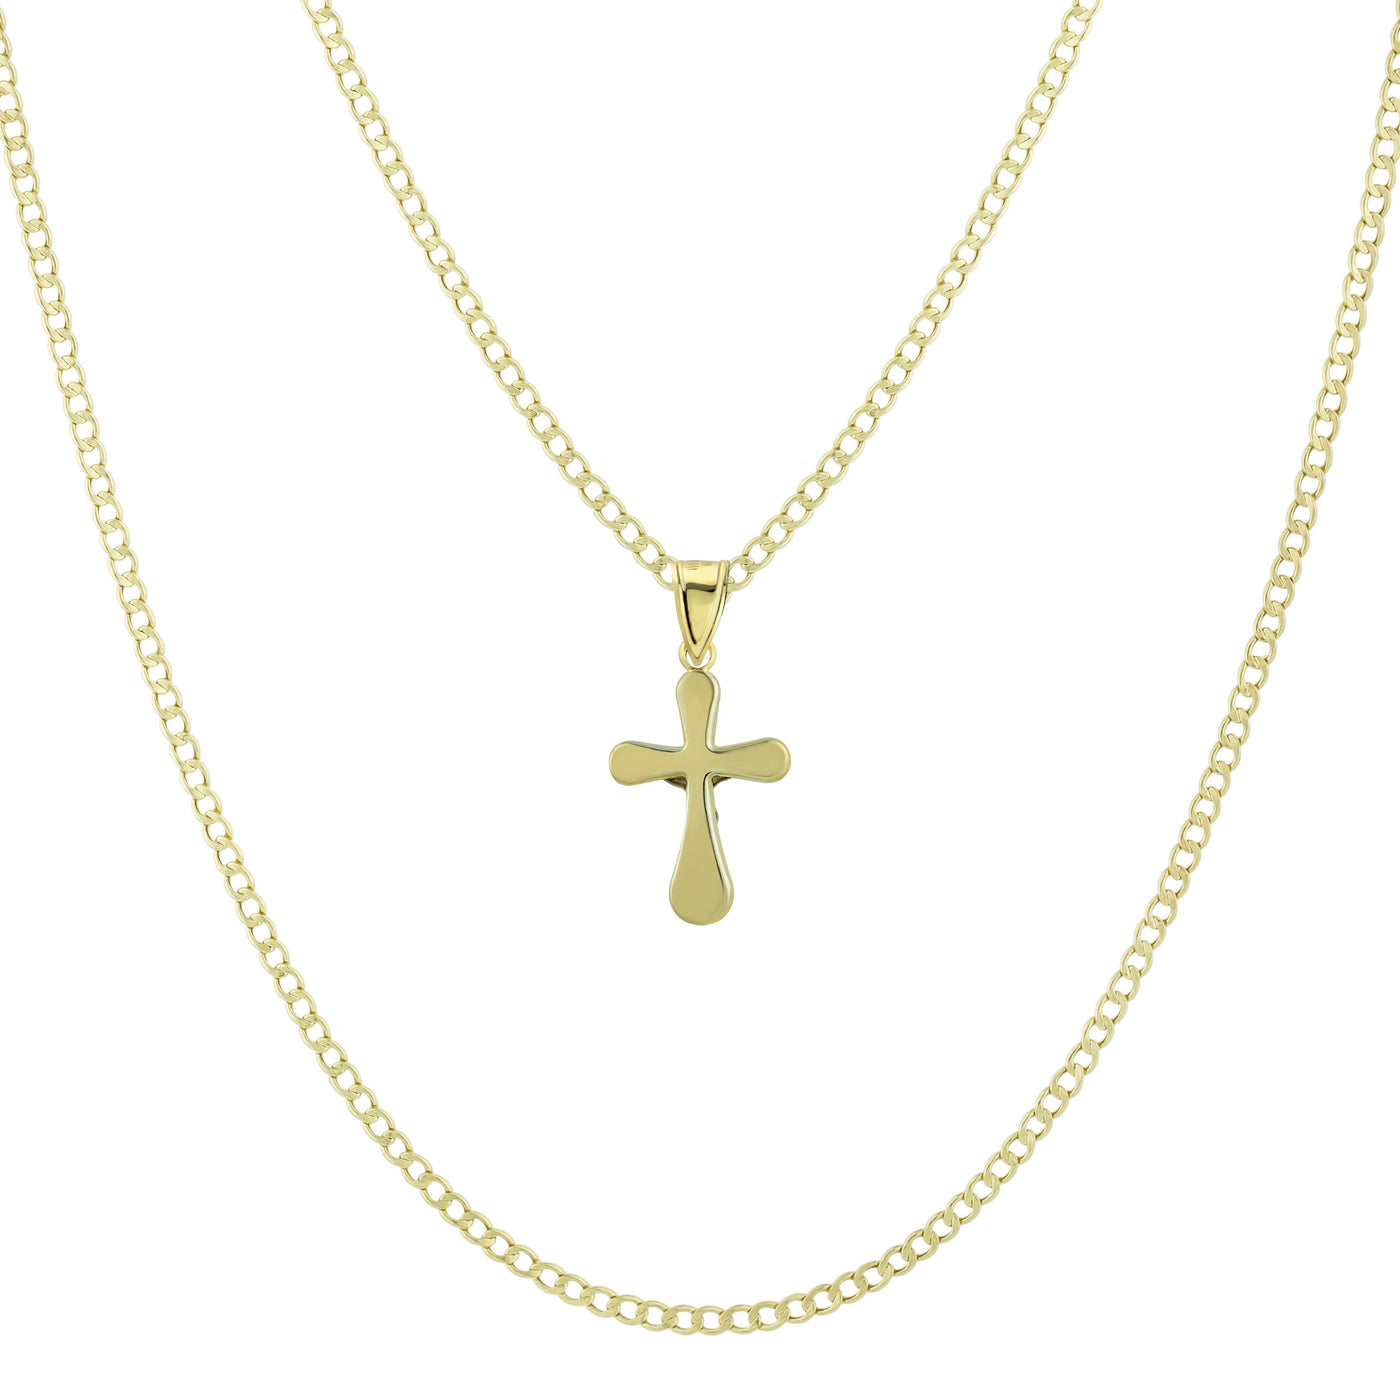 1 1/4" Jesus Crucifix Cross Pendant & Chain Necklace Set 10K Yellow White Gold